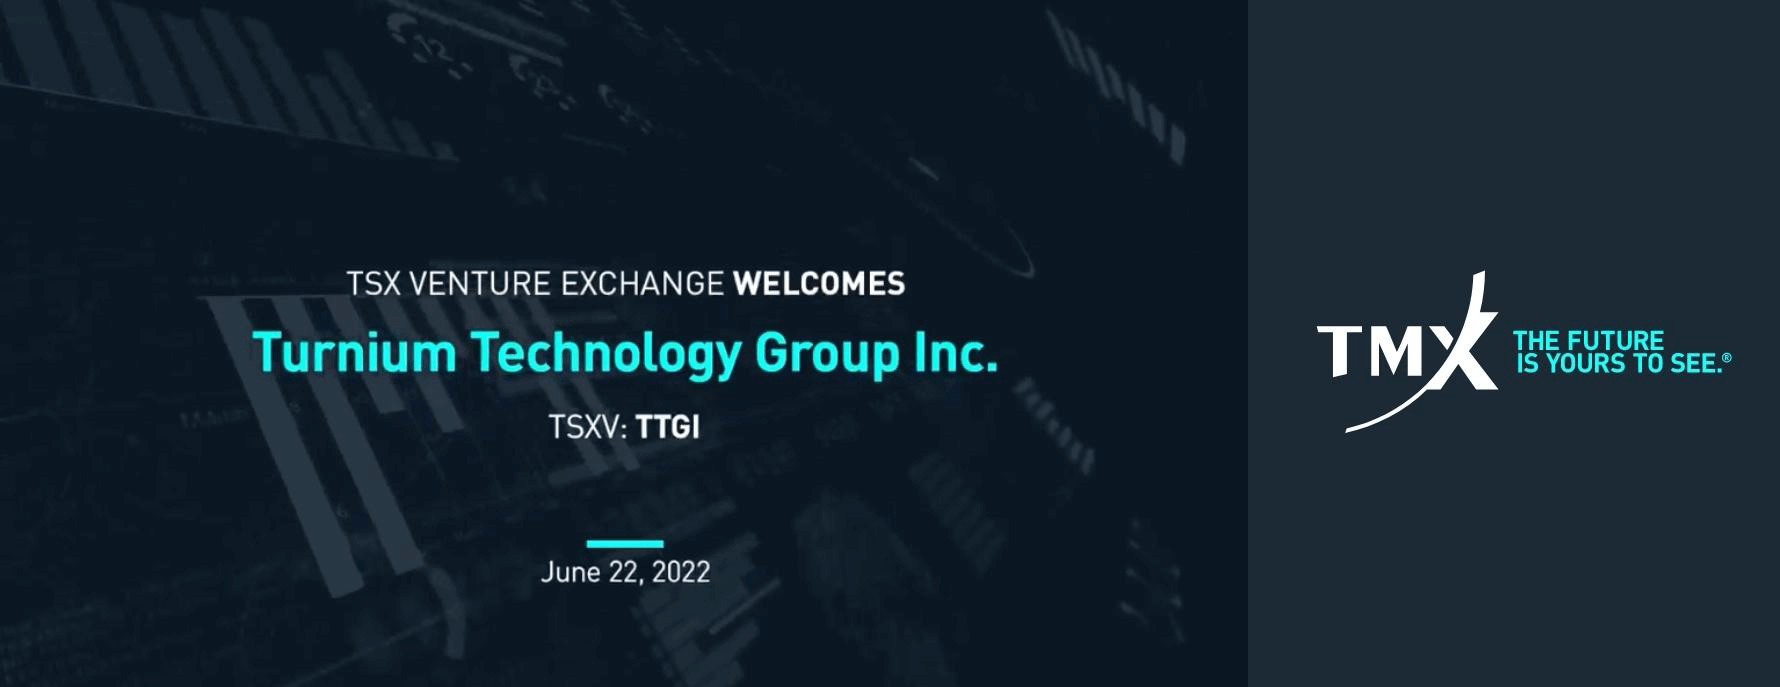 TMX Group Welcomes TTGI To The TSXV